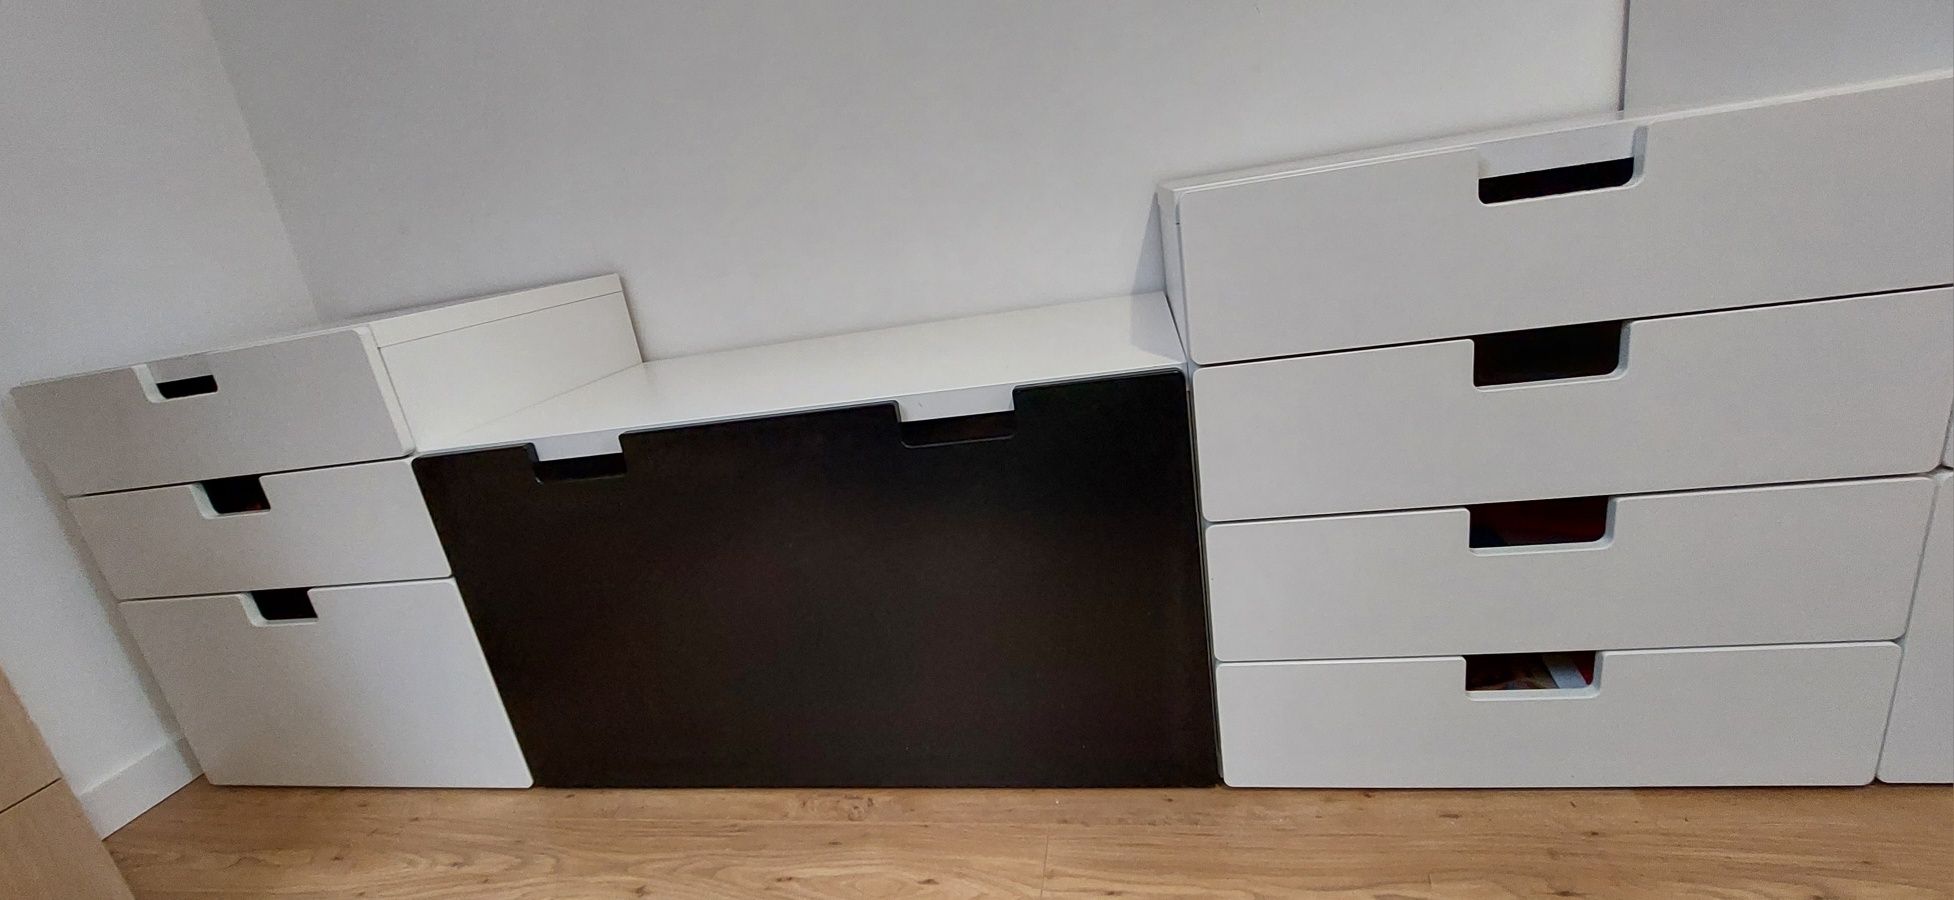 Zestaw mebli Ikea stuva stan bdb- tylko ławka  i szafa